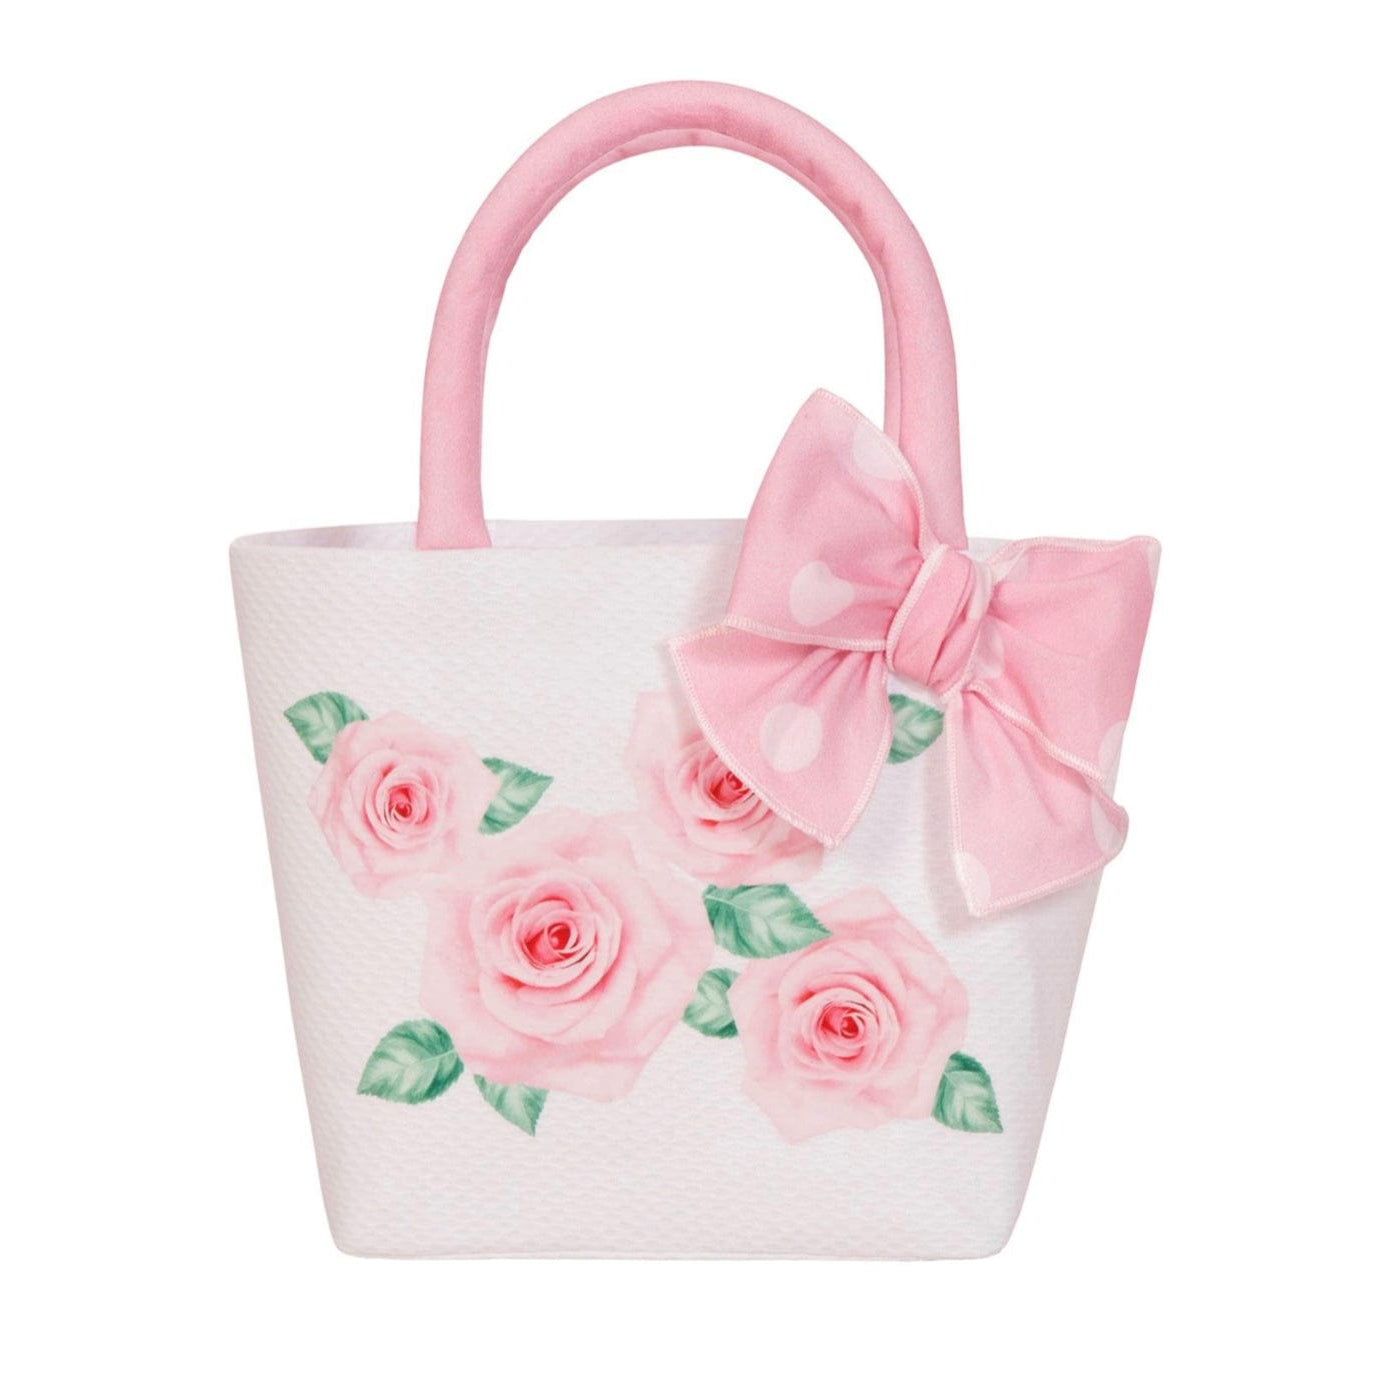 Balloon Chic Pink & White Spot Handbag